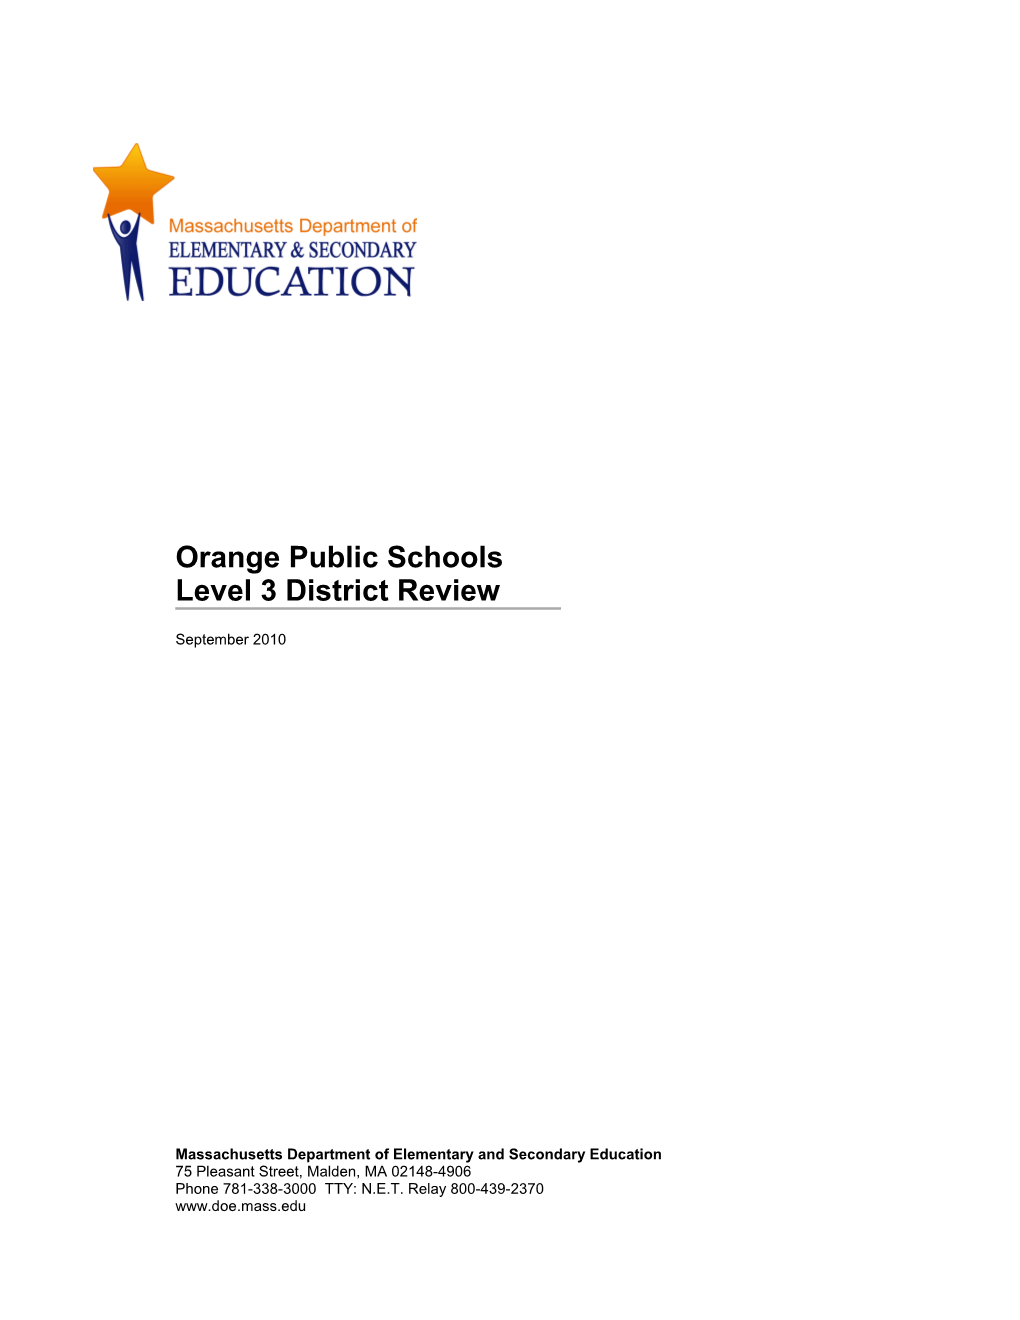 Orange Public Schools Level 3 Review Report, September 2010